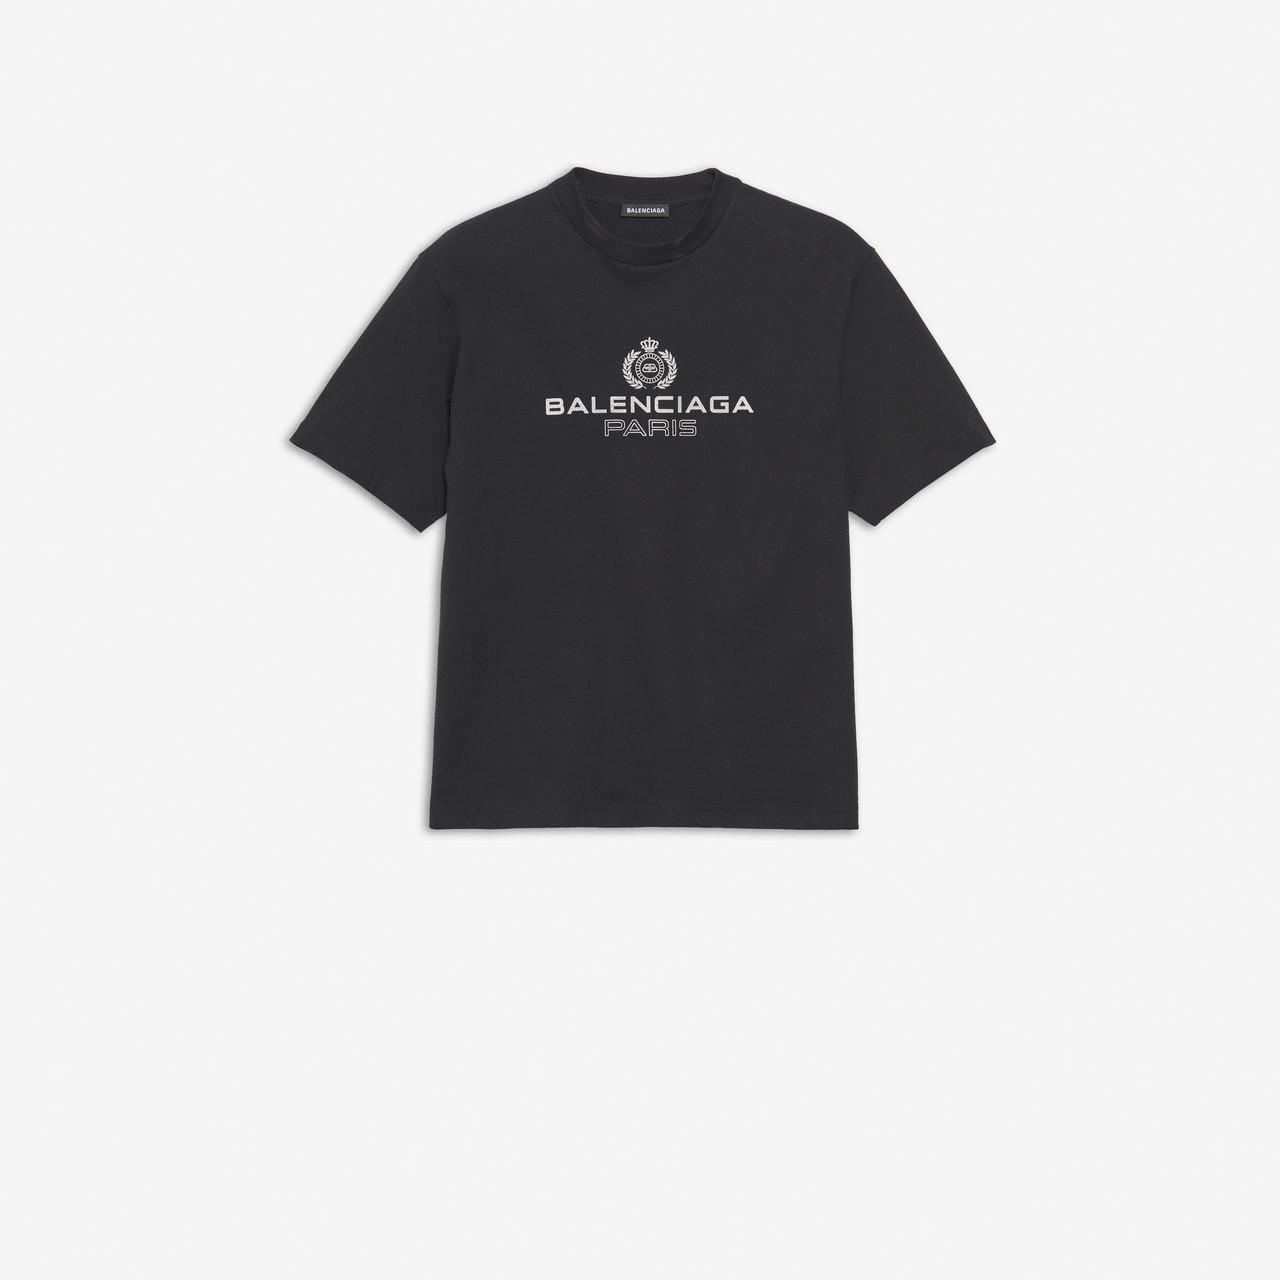 Balenciaga Cotton Bb Paris Regular T-shirt in Black for Men - Lyst